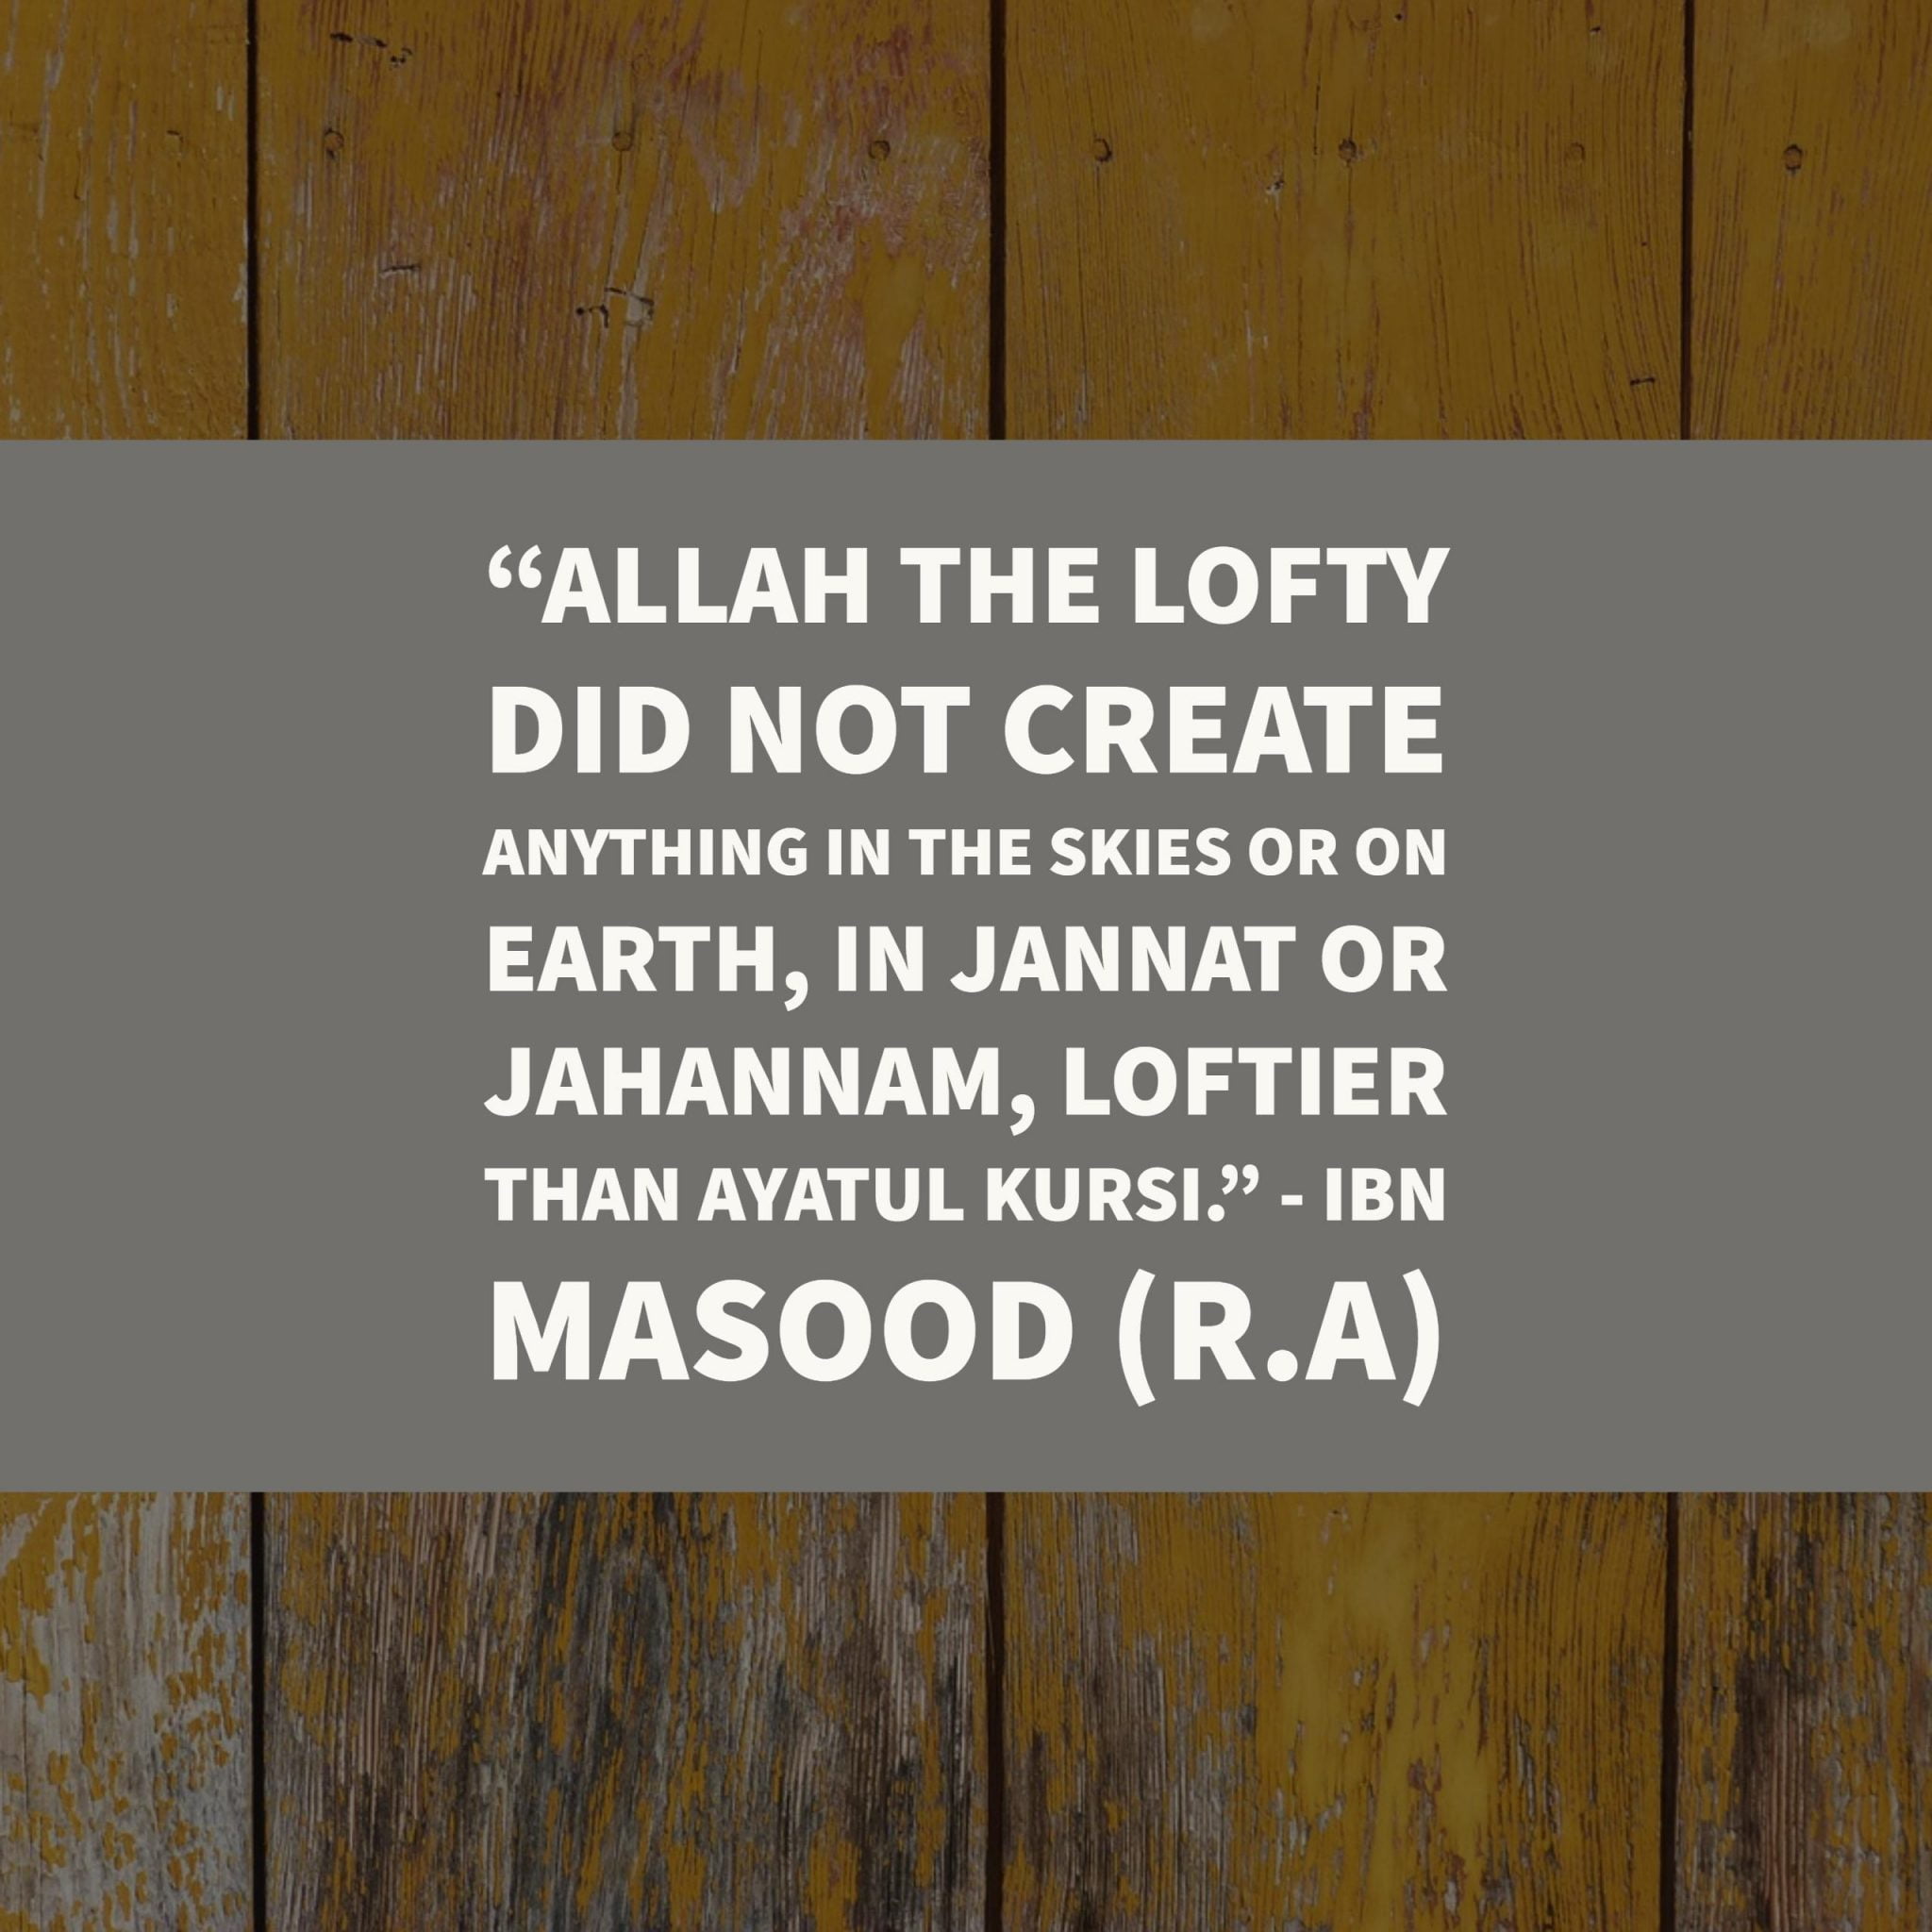 ibn masood about ayat ul qursi